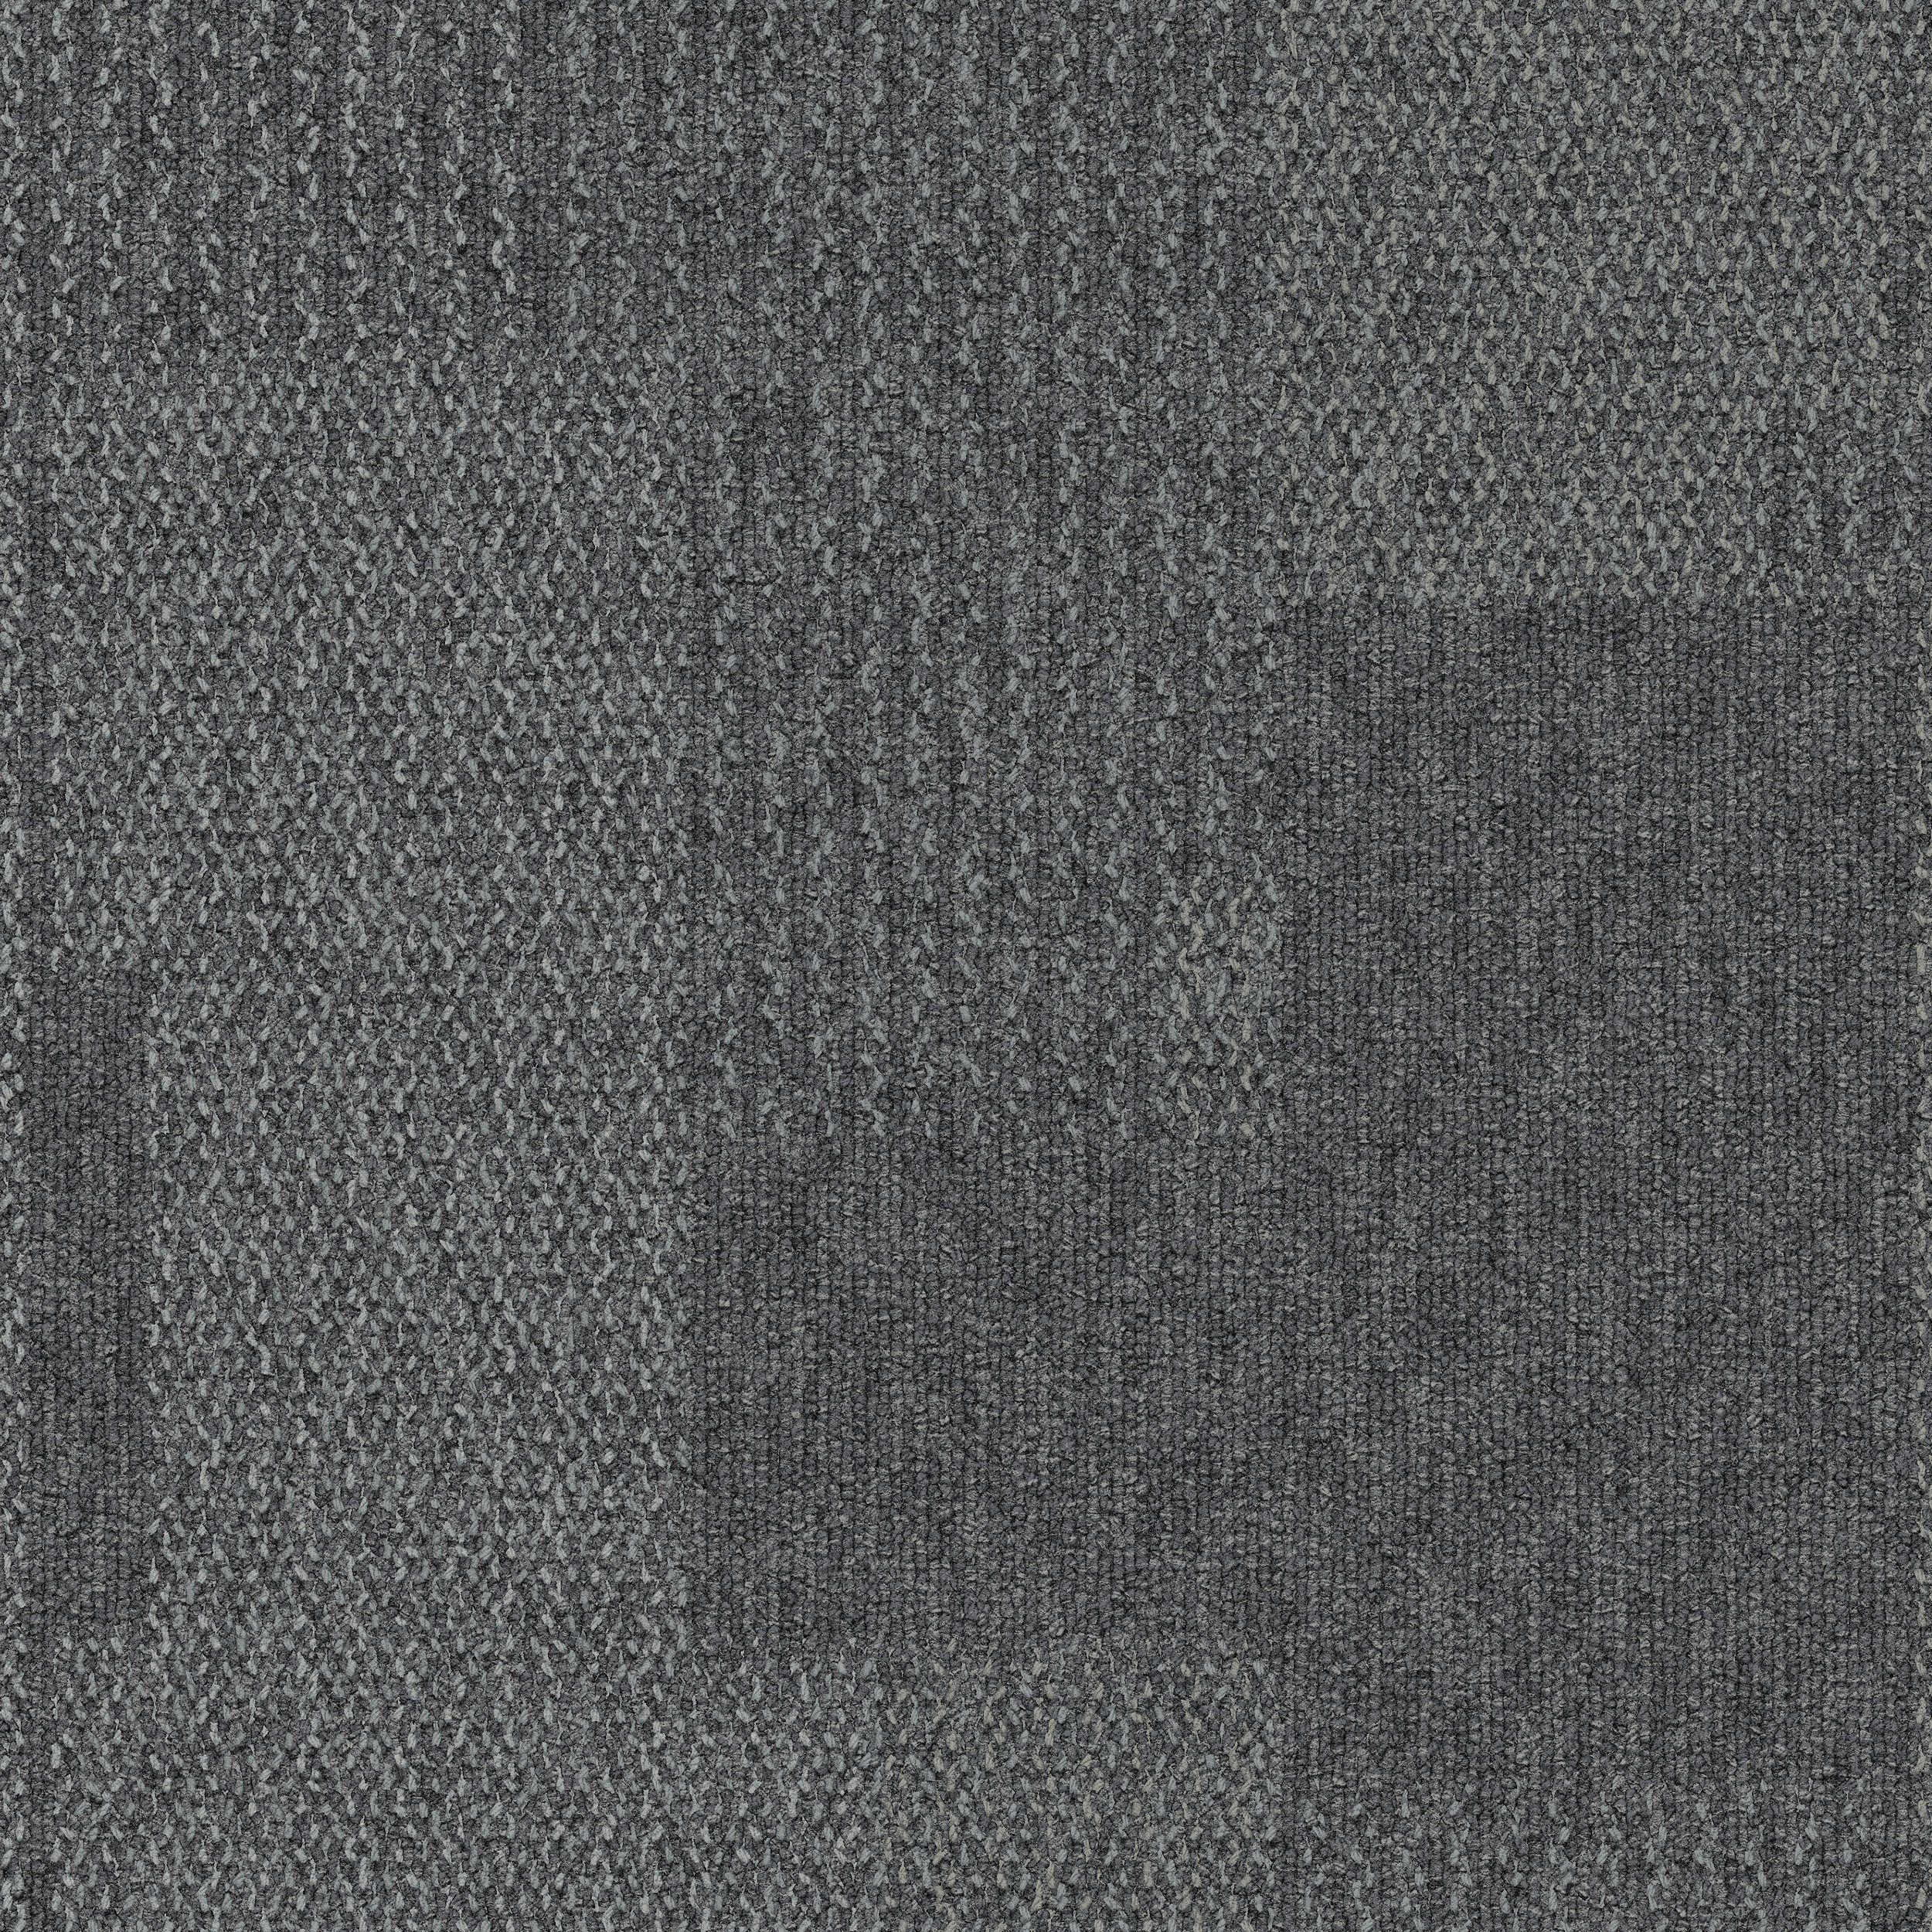 image Transformation Carpet Tile In Gabbro numéro 2